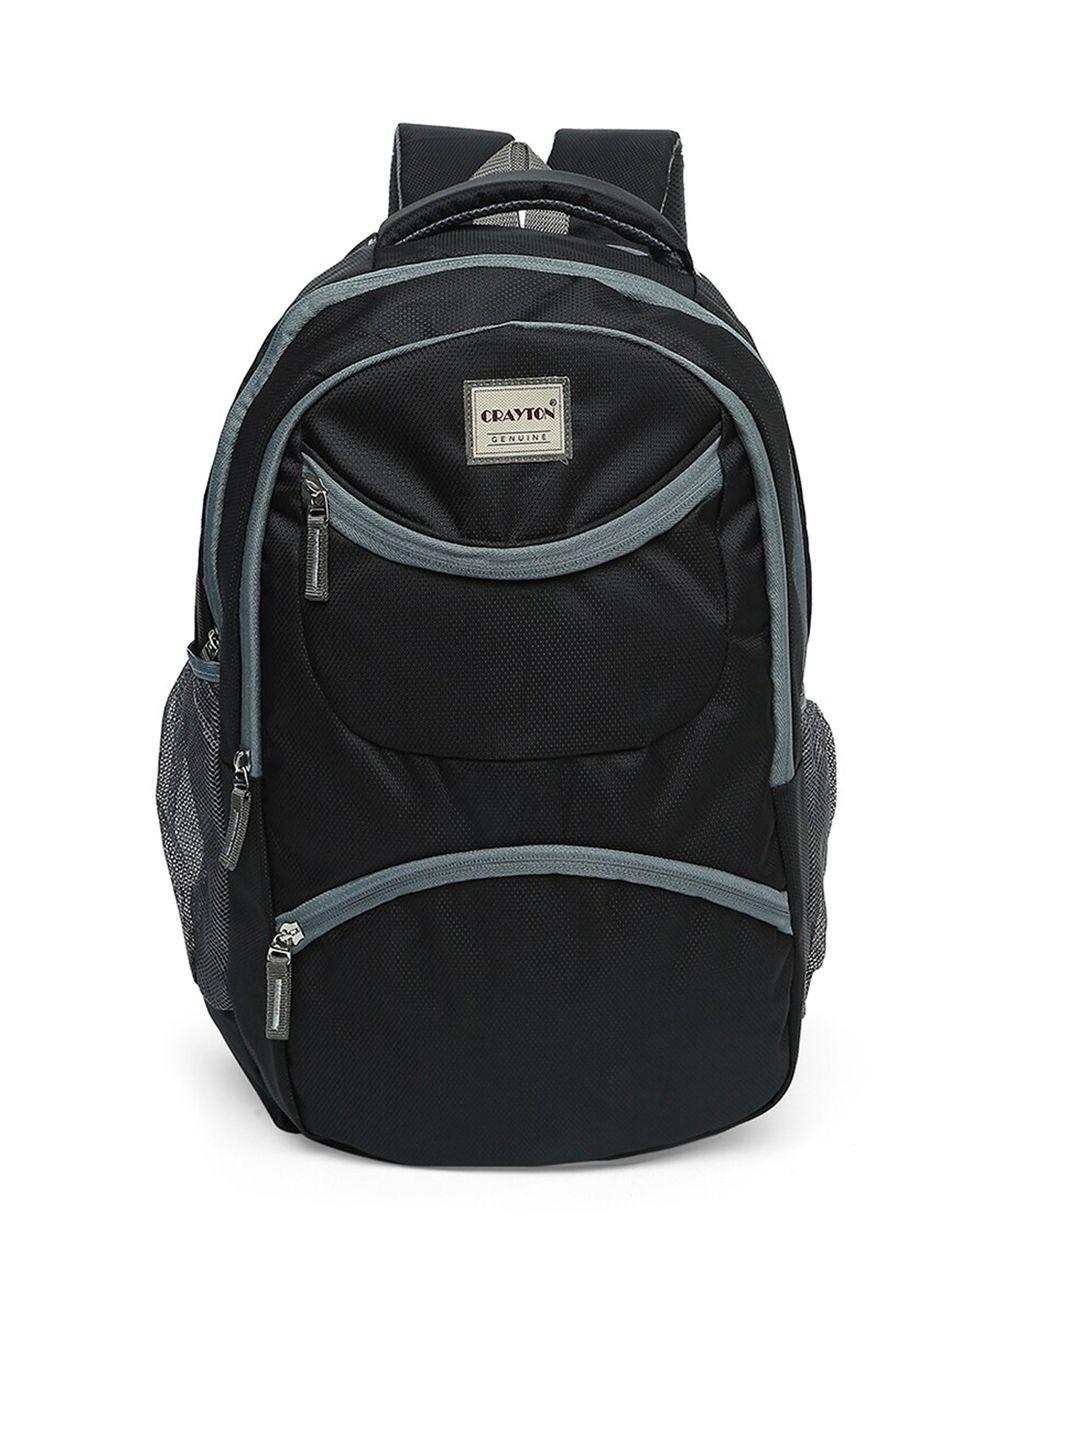 crayton unisex 15.6 inch laptop medium padded backpack with compression straps